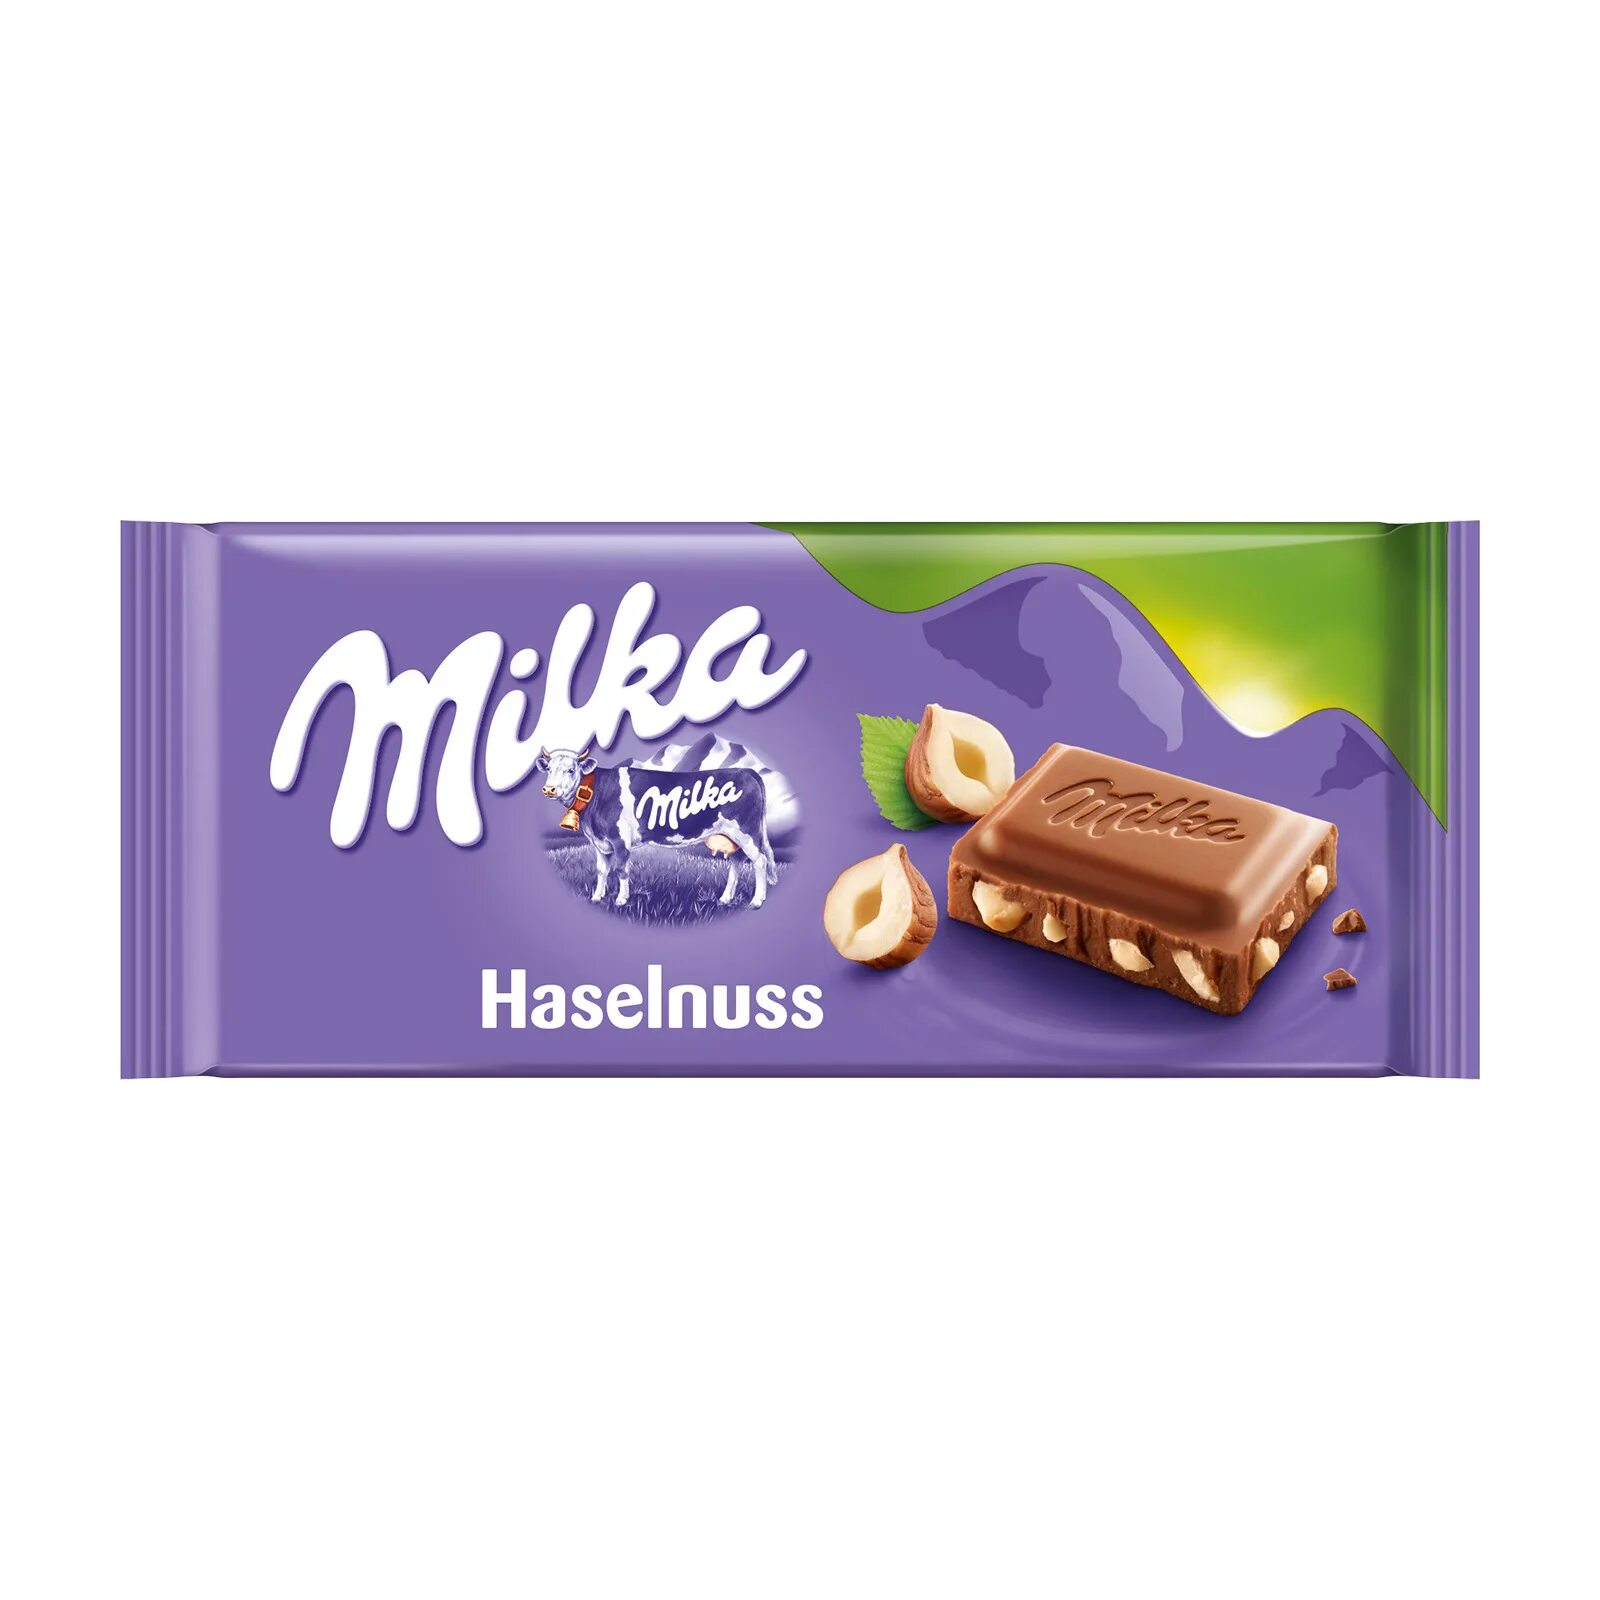 Шоколад Милка Milka молочный 100гр. Шоколад Милка молочный whole Hazelnut. Шоколад молочный Milka Hazelnuts 100гр. Милка шоколад 100г. 1х4х20 цельный фундук. Милка продается